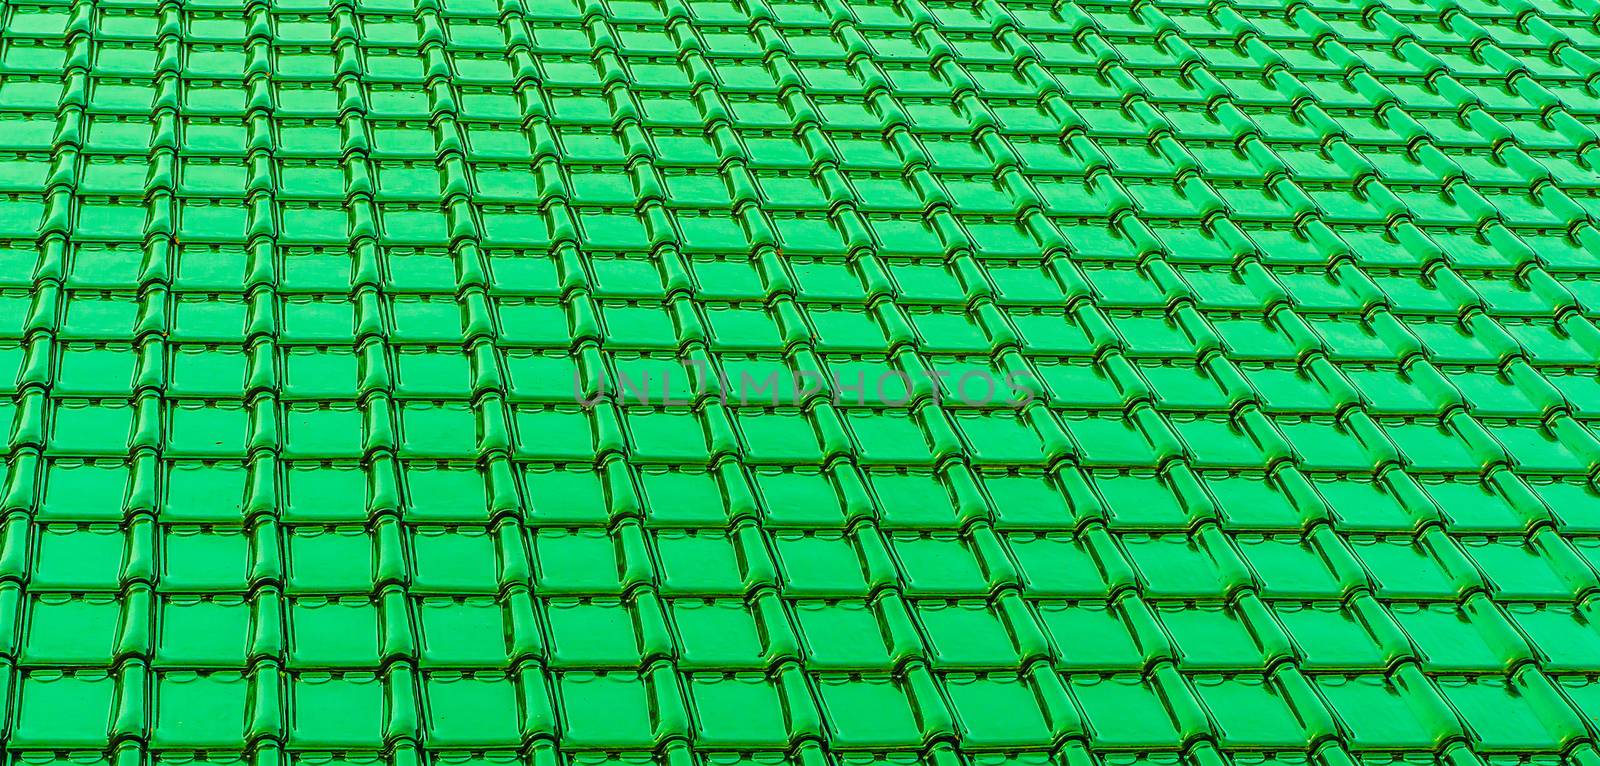 modern deep green glossy rooftop tiling texture background by charlottebleijenberg